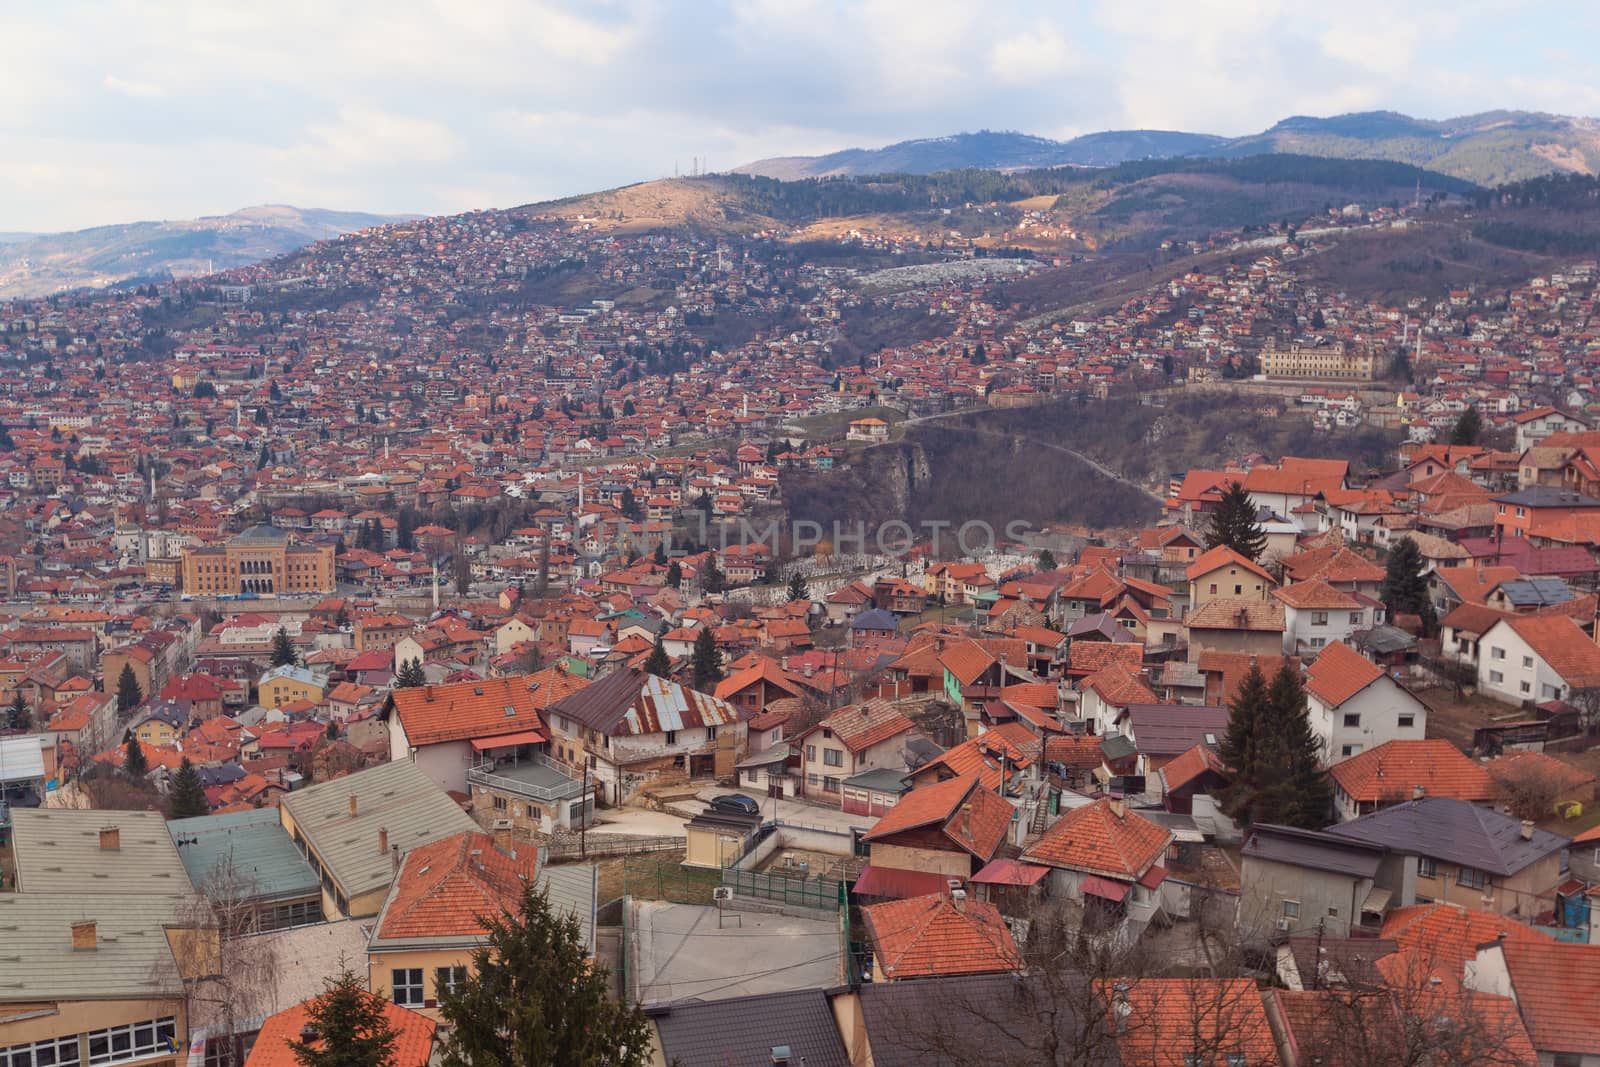 Aerial view of Sarajevo, Bosnia and Herzegovina